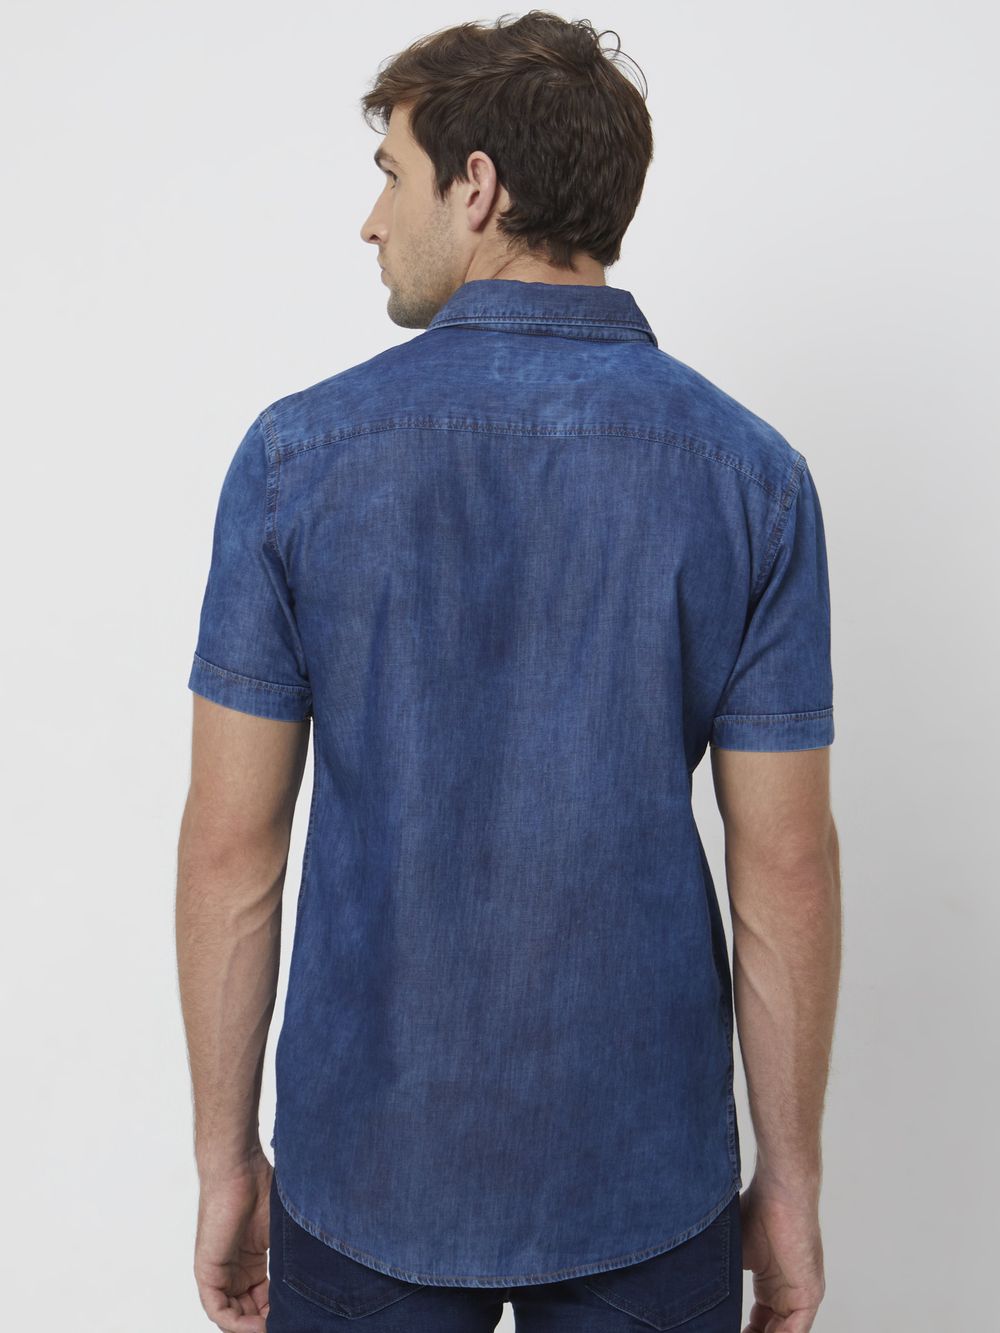 Indigo Blue Denim Plain Slim Fit Casual Shirt